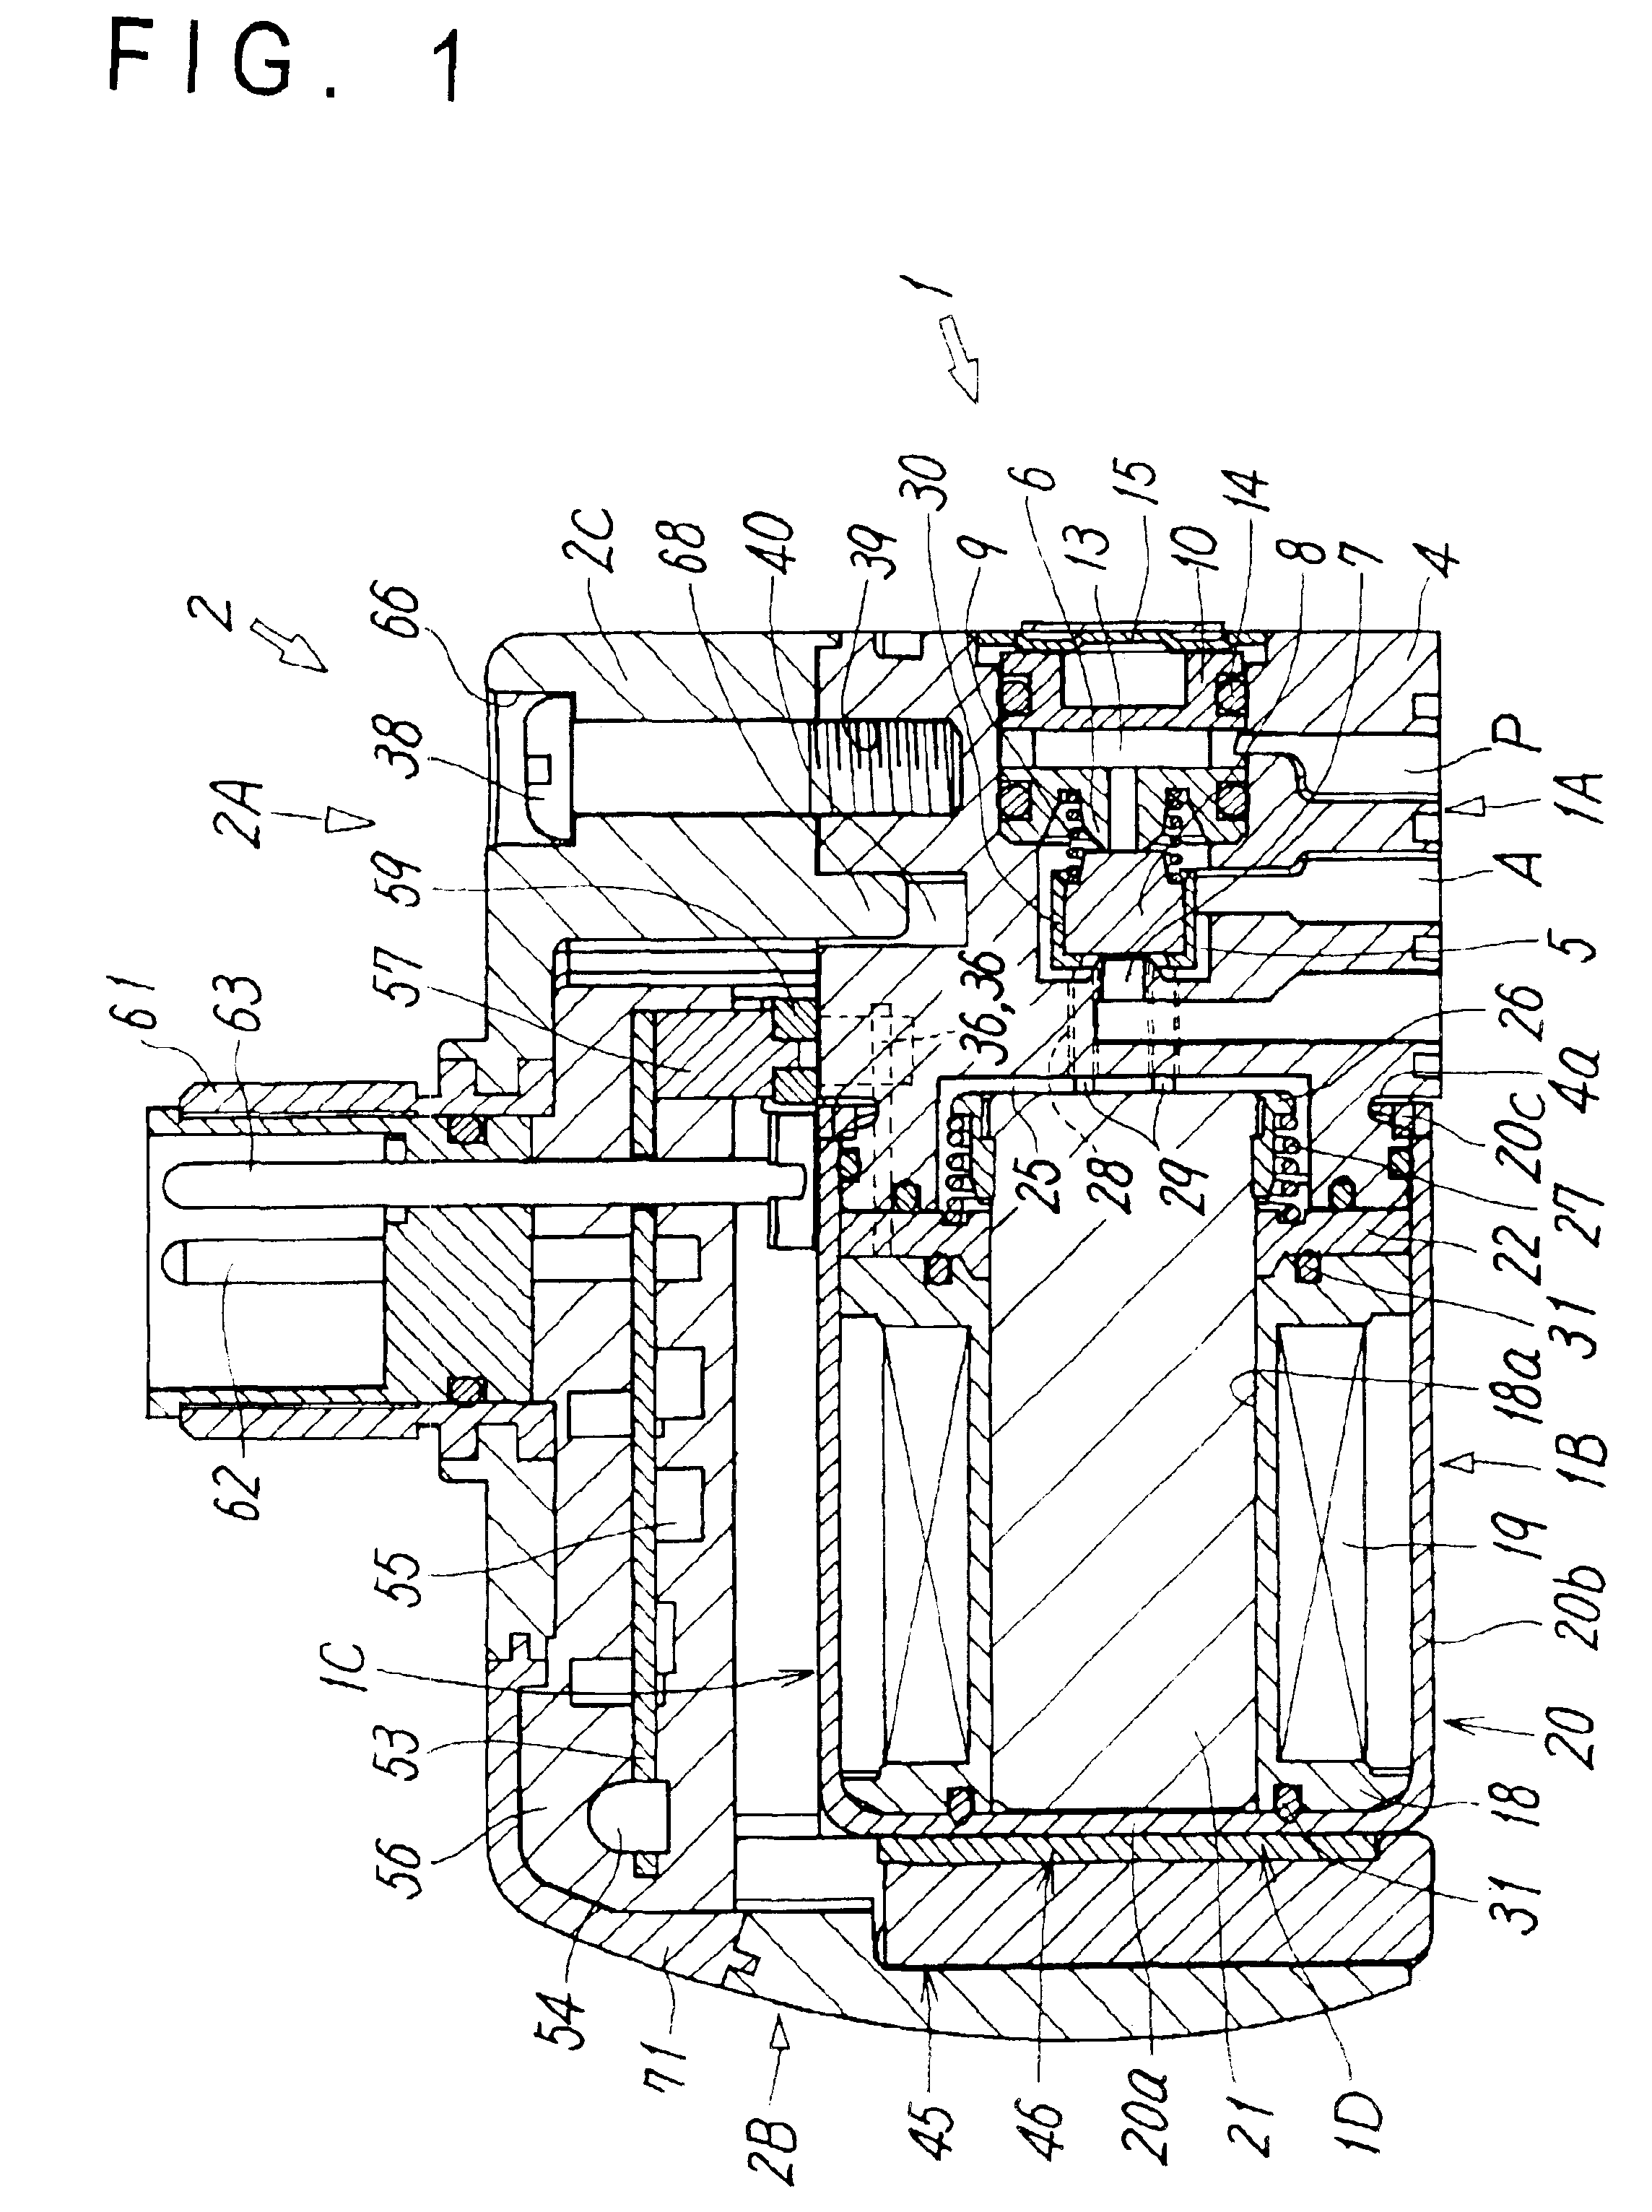 Solenoid valve with terminal box